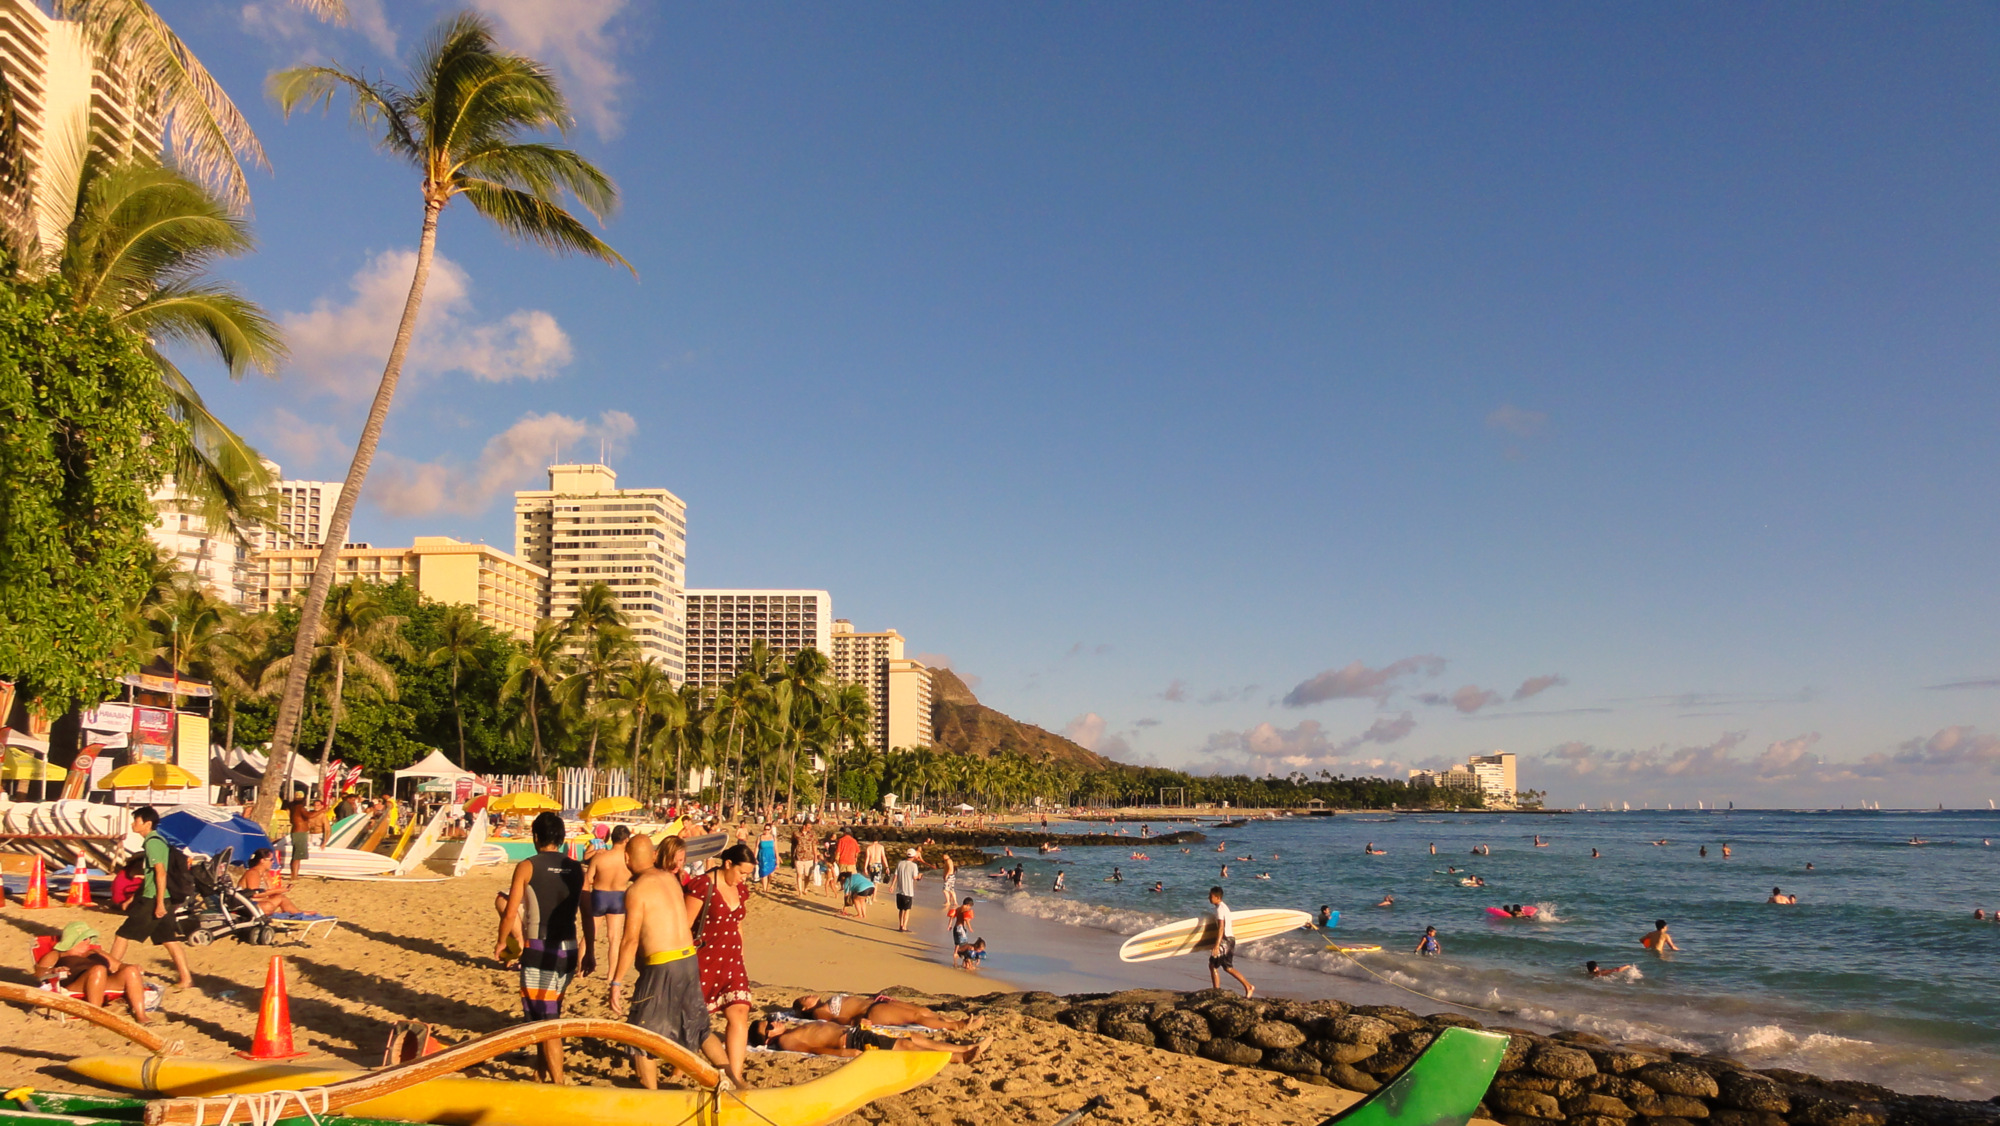 File:Waikiki Beach, Honolulu.JPG - Wikimedia Commons